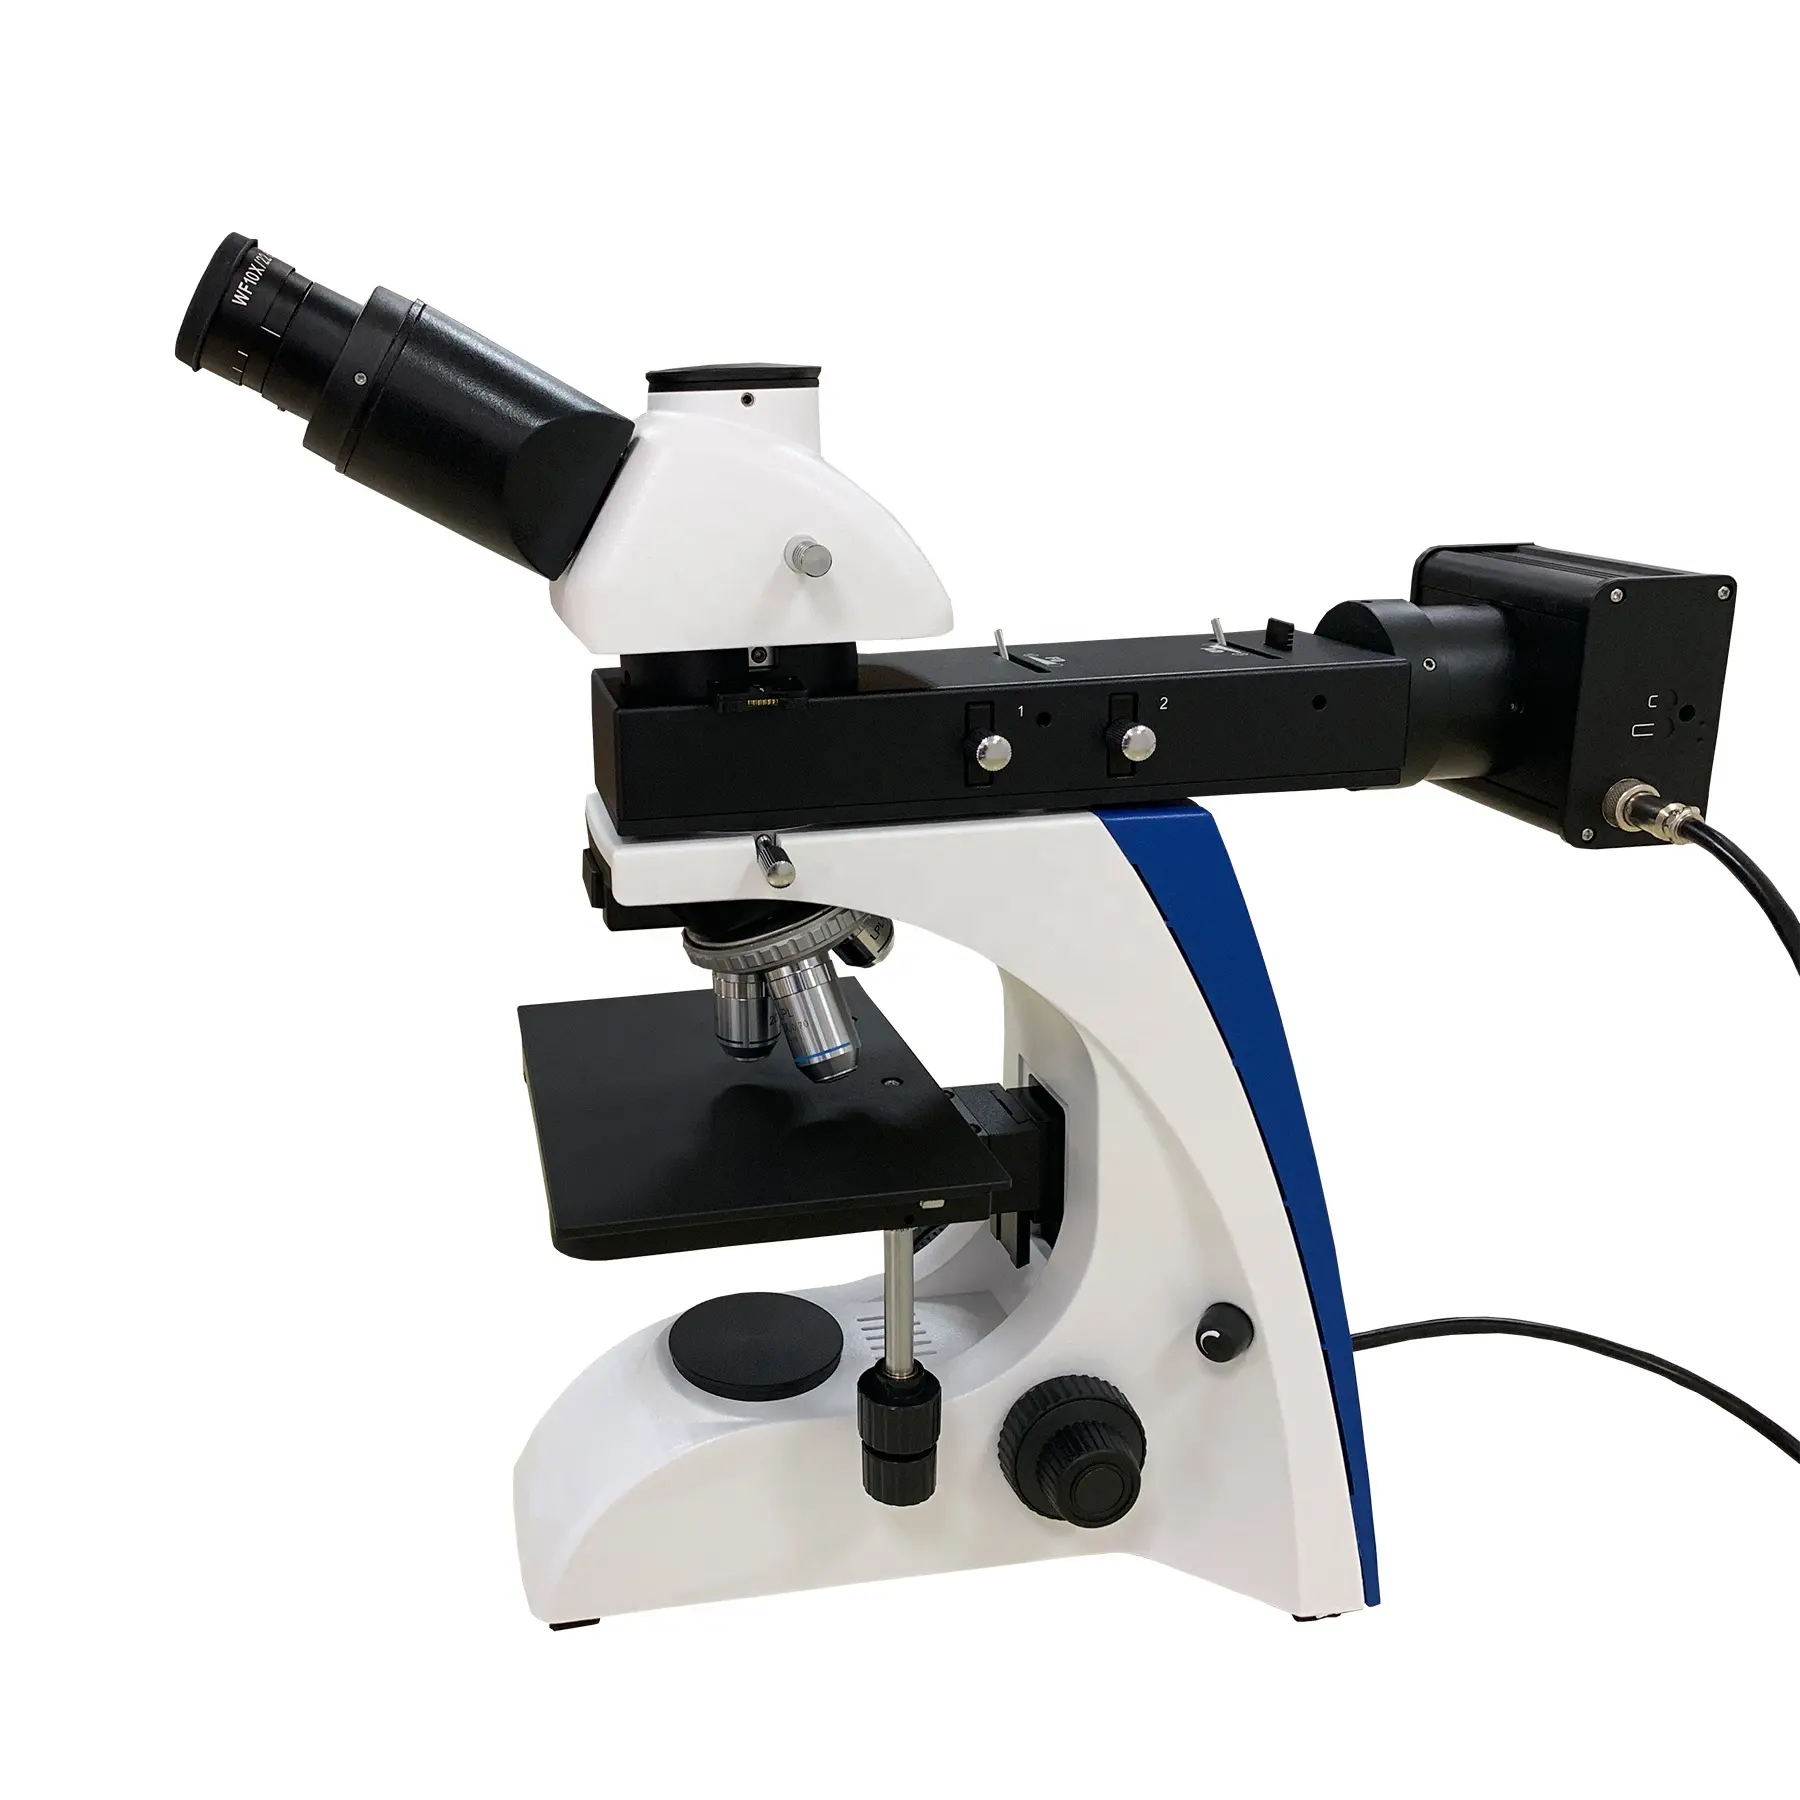 MIT300 Infnity Semi Apo chromatic Objective Trin ocular Reflecting Metallo graphic Microscope